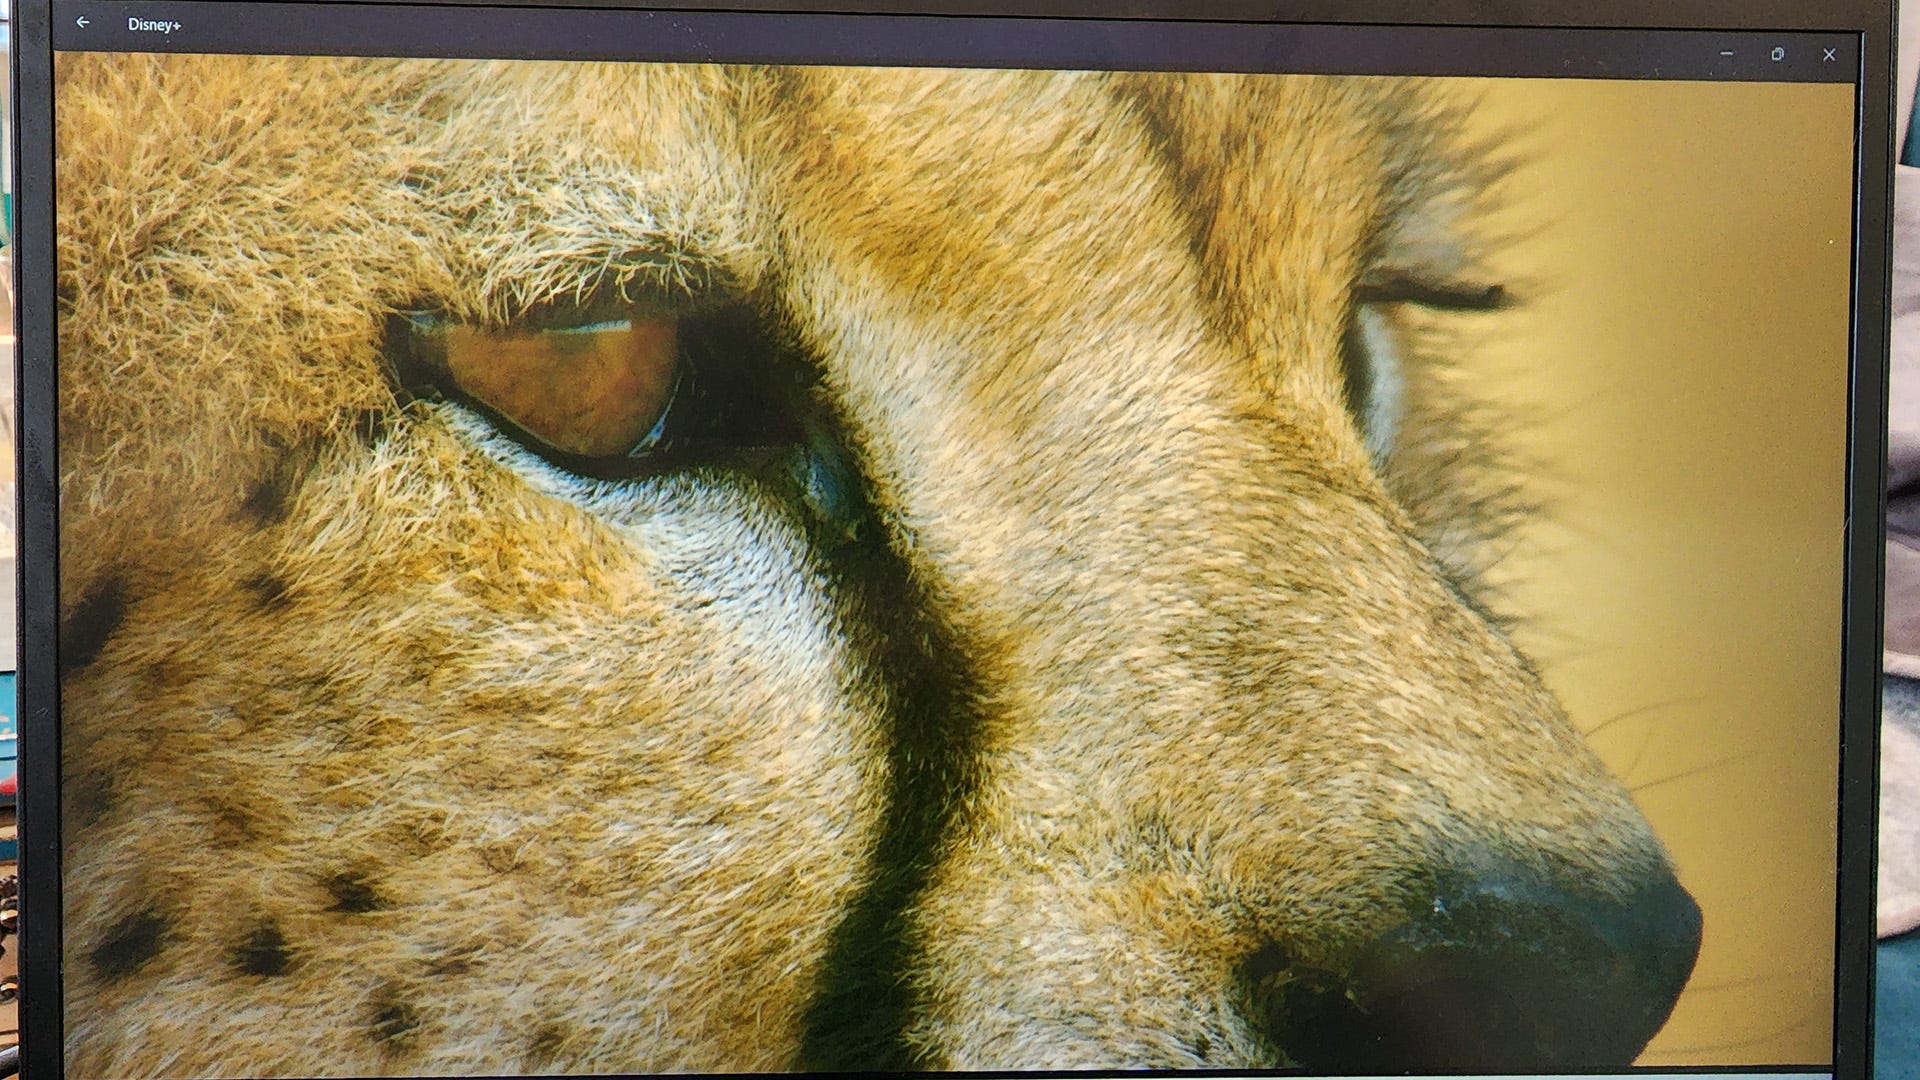 A close-up shot of a cheetah face.